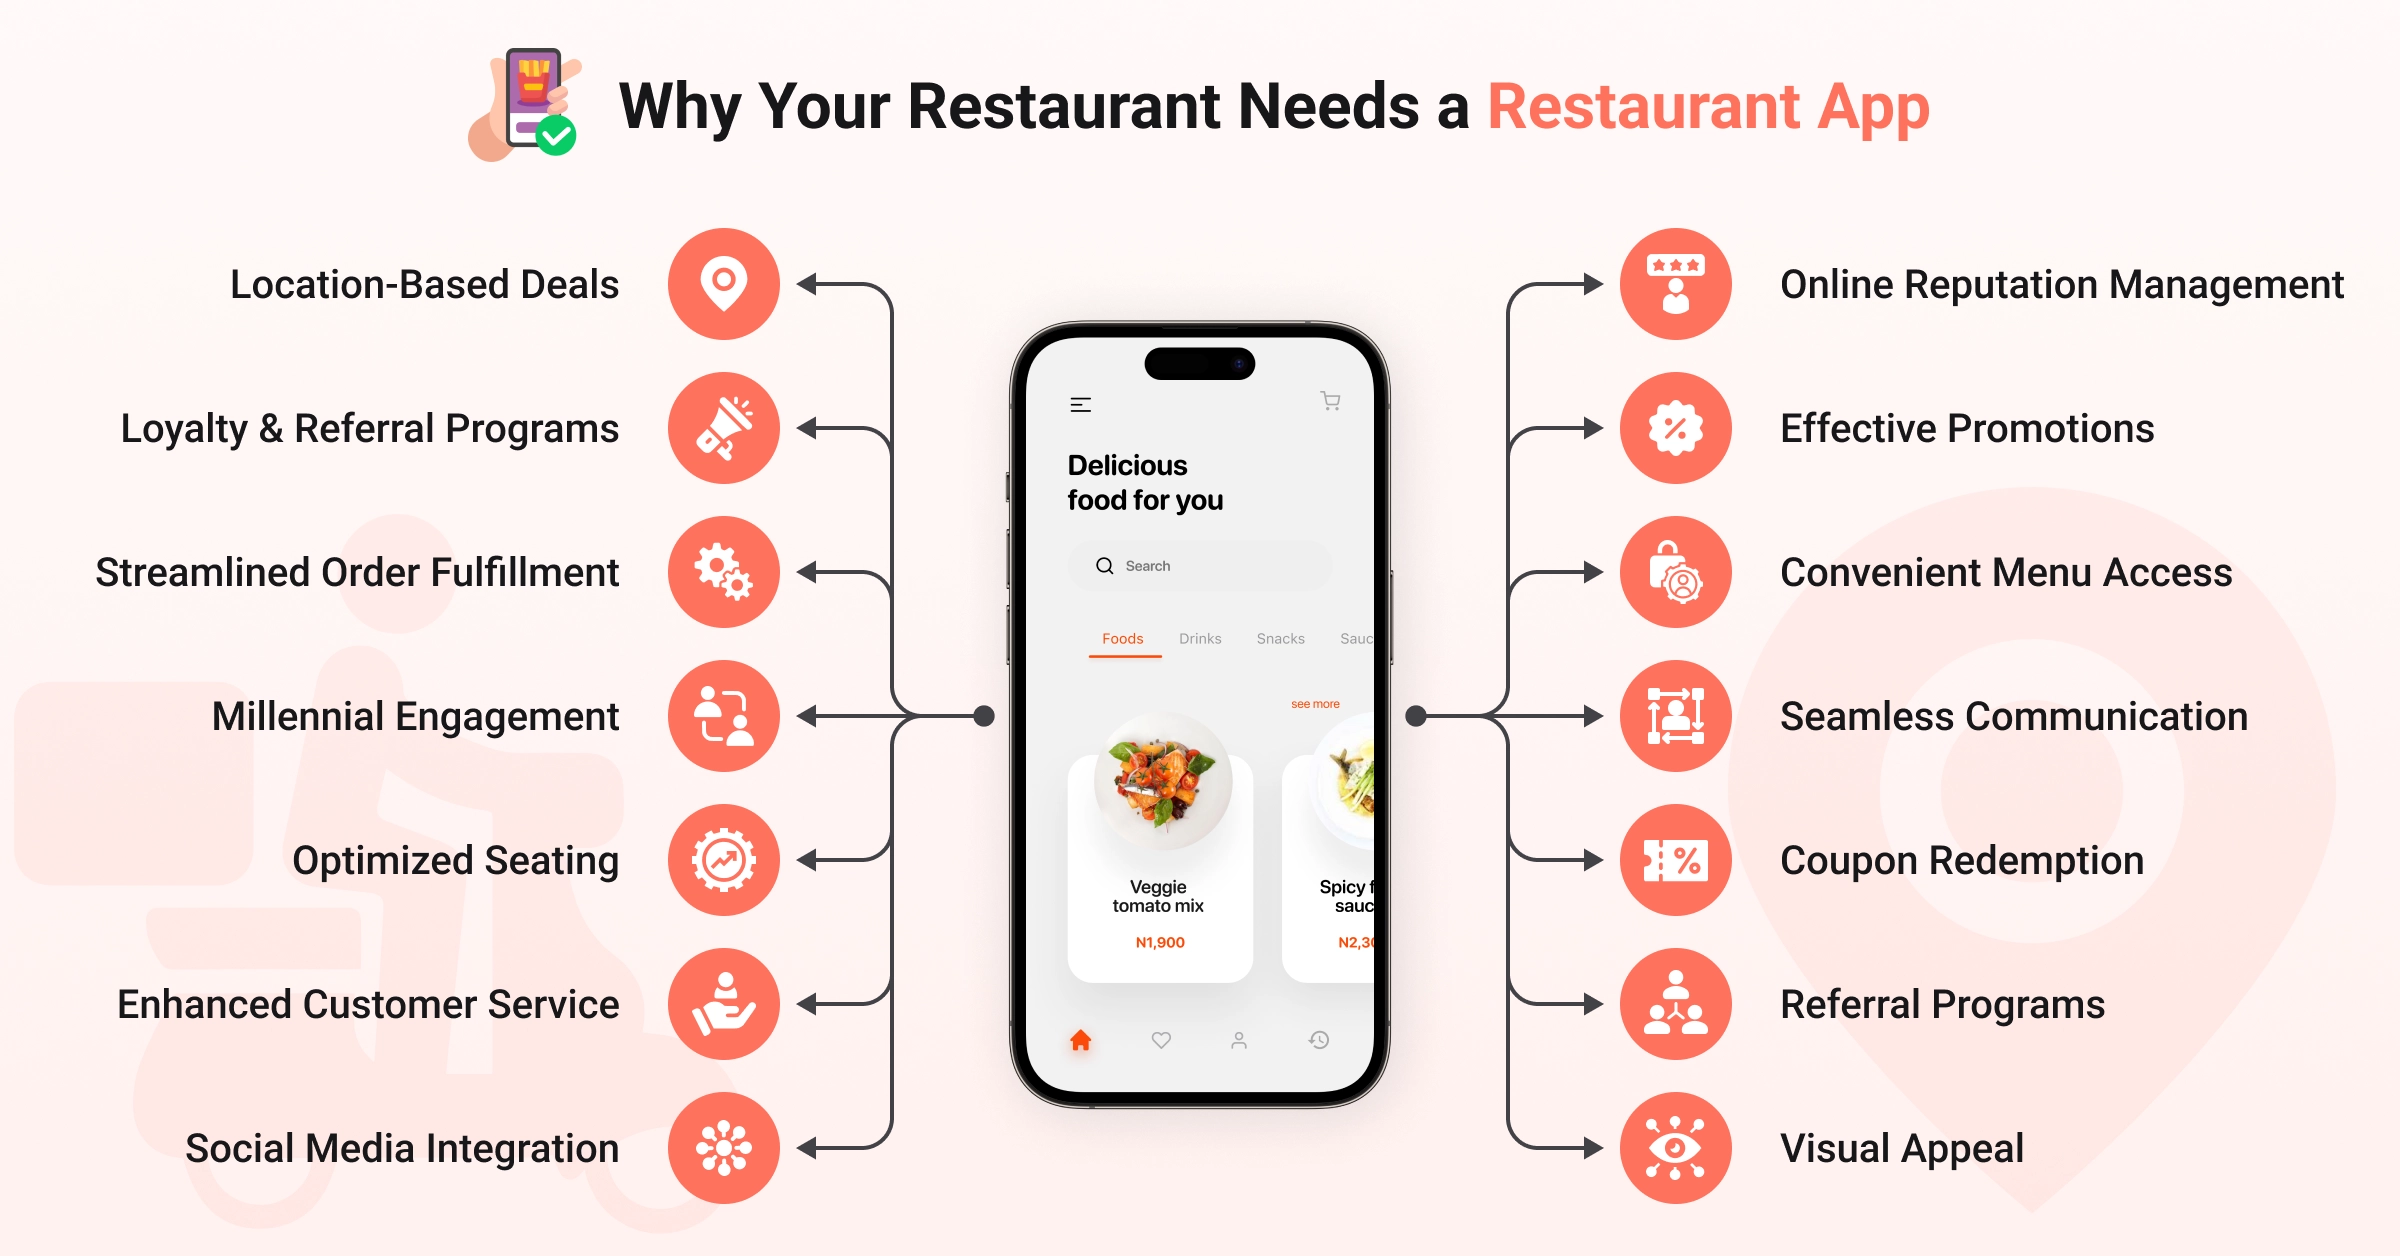 2.2 Why Your Restaurant Needs a Restaurant App